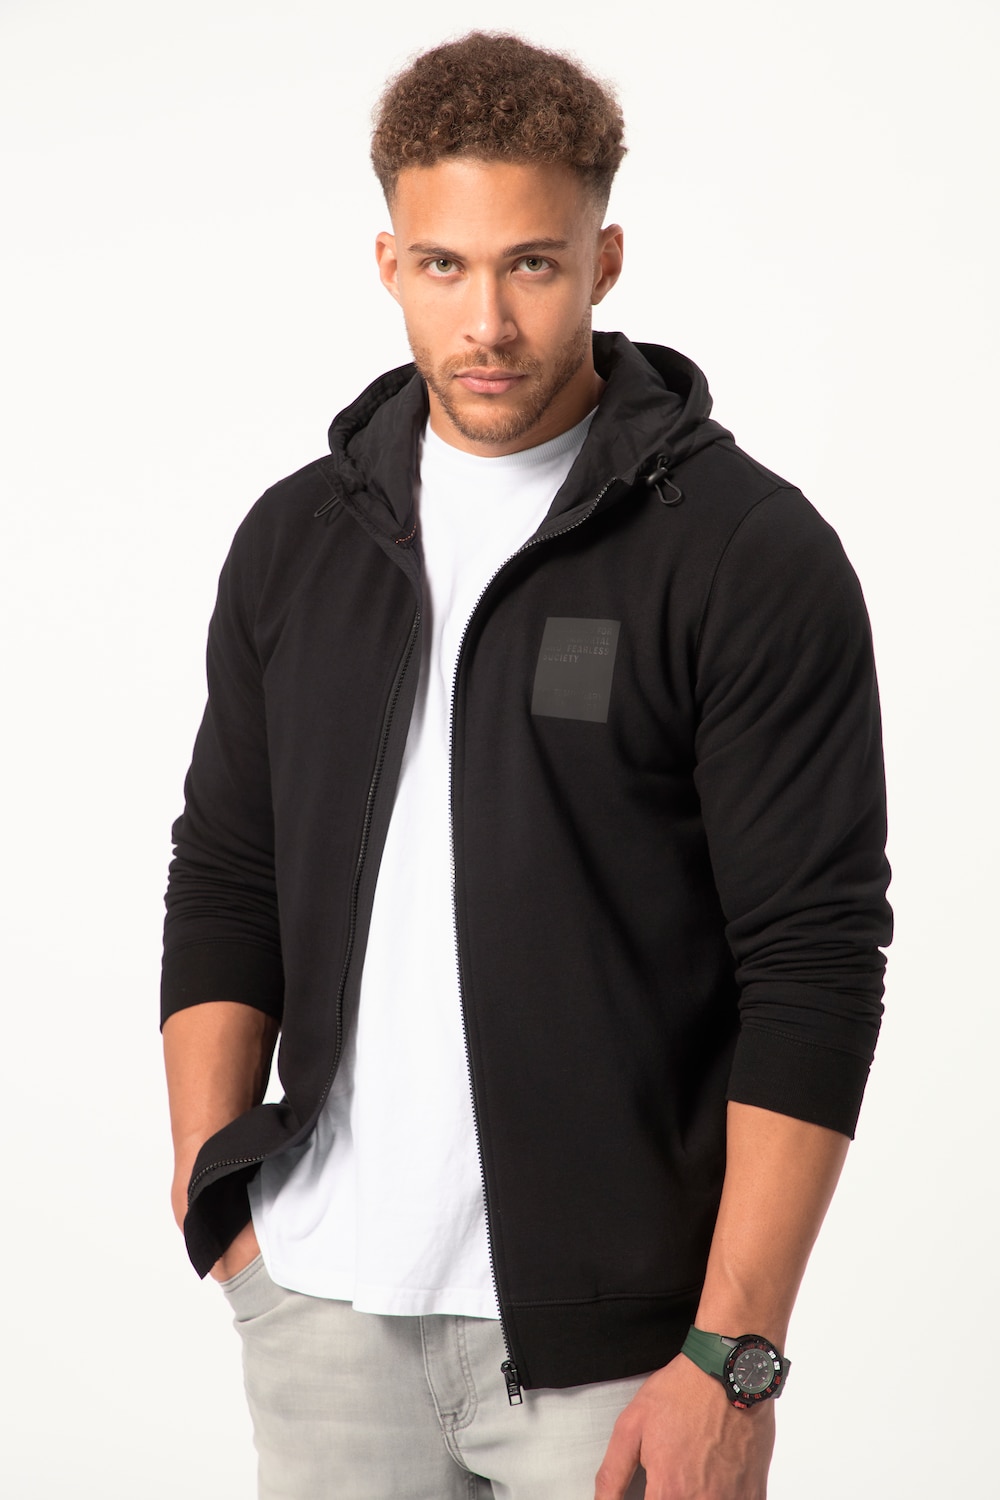 Grote Maten STHUGE hoodie-jackmale, zwart, Maat: L, Katoen/Polyester, STHUGE